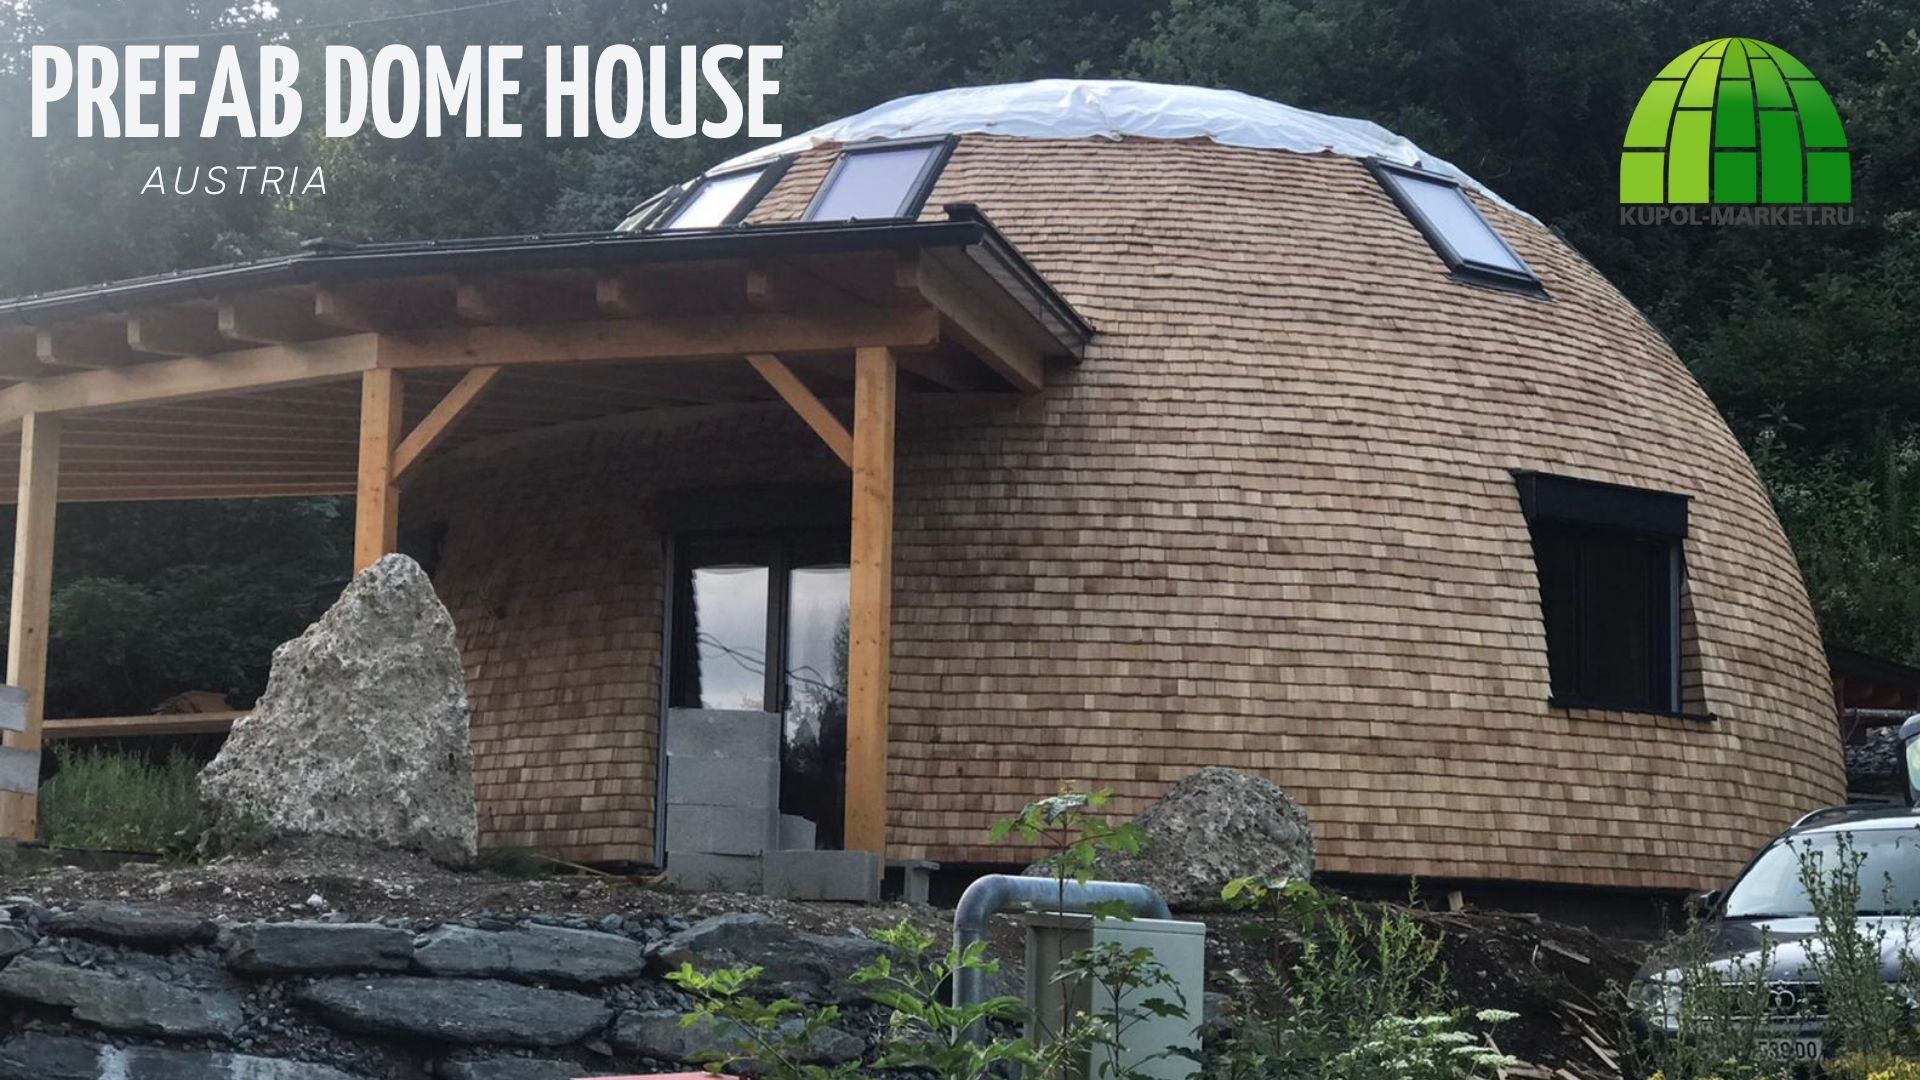 Prefab dome house based on kupol market house kit in Austria